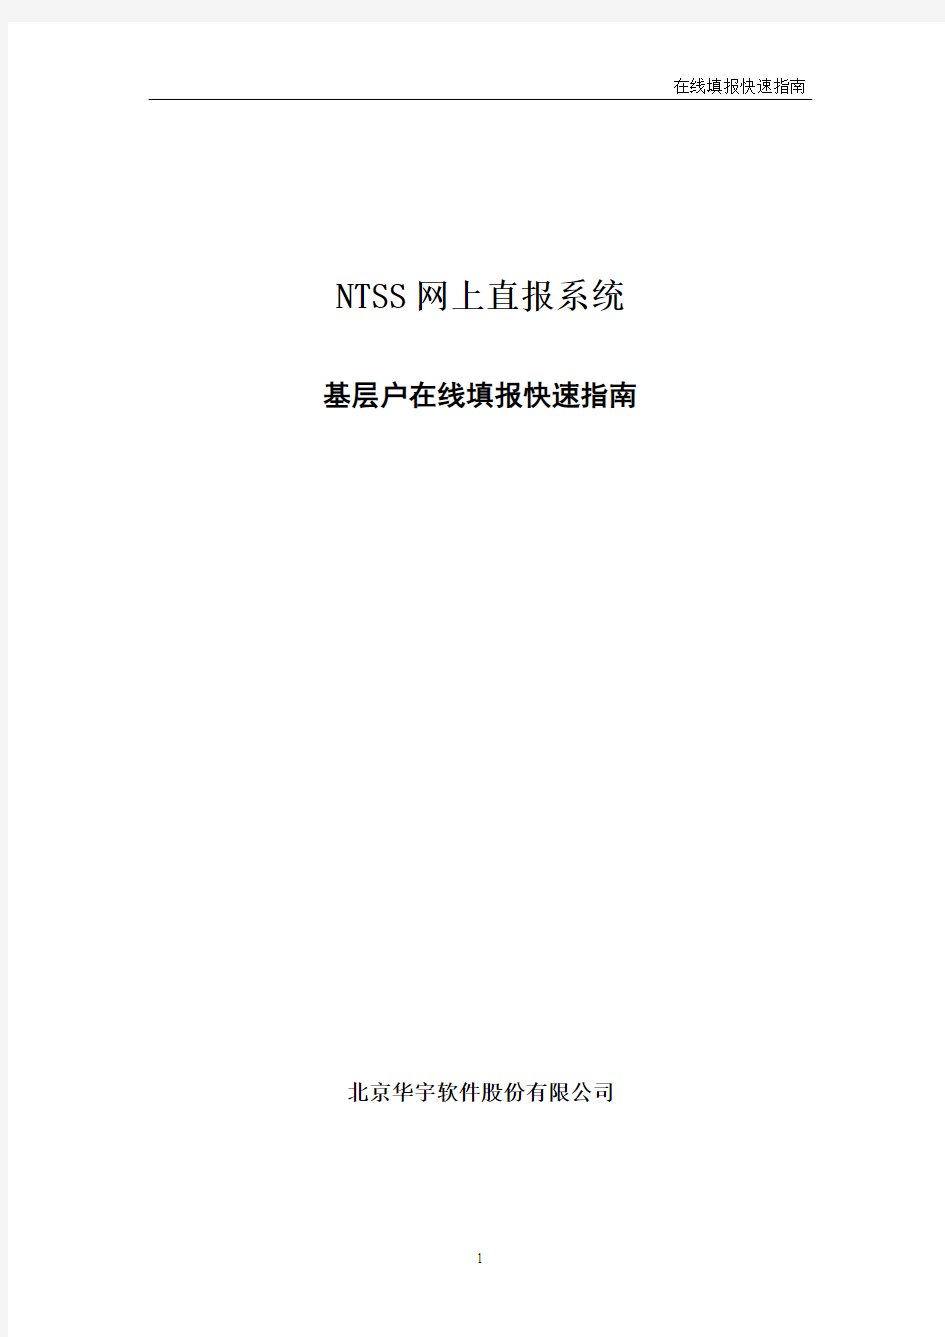 NTSS网上直报系统 - 上海市浦东新区石油制品行业协会